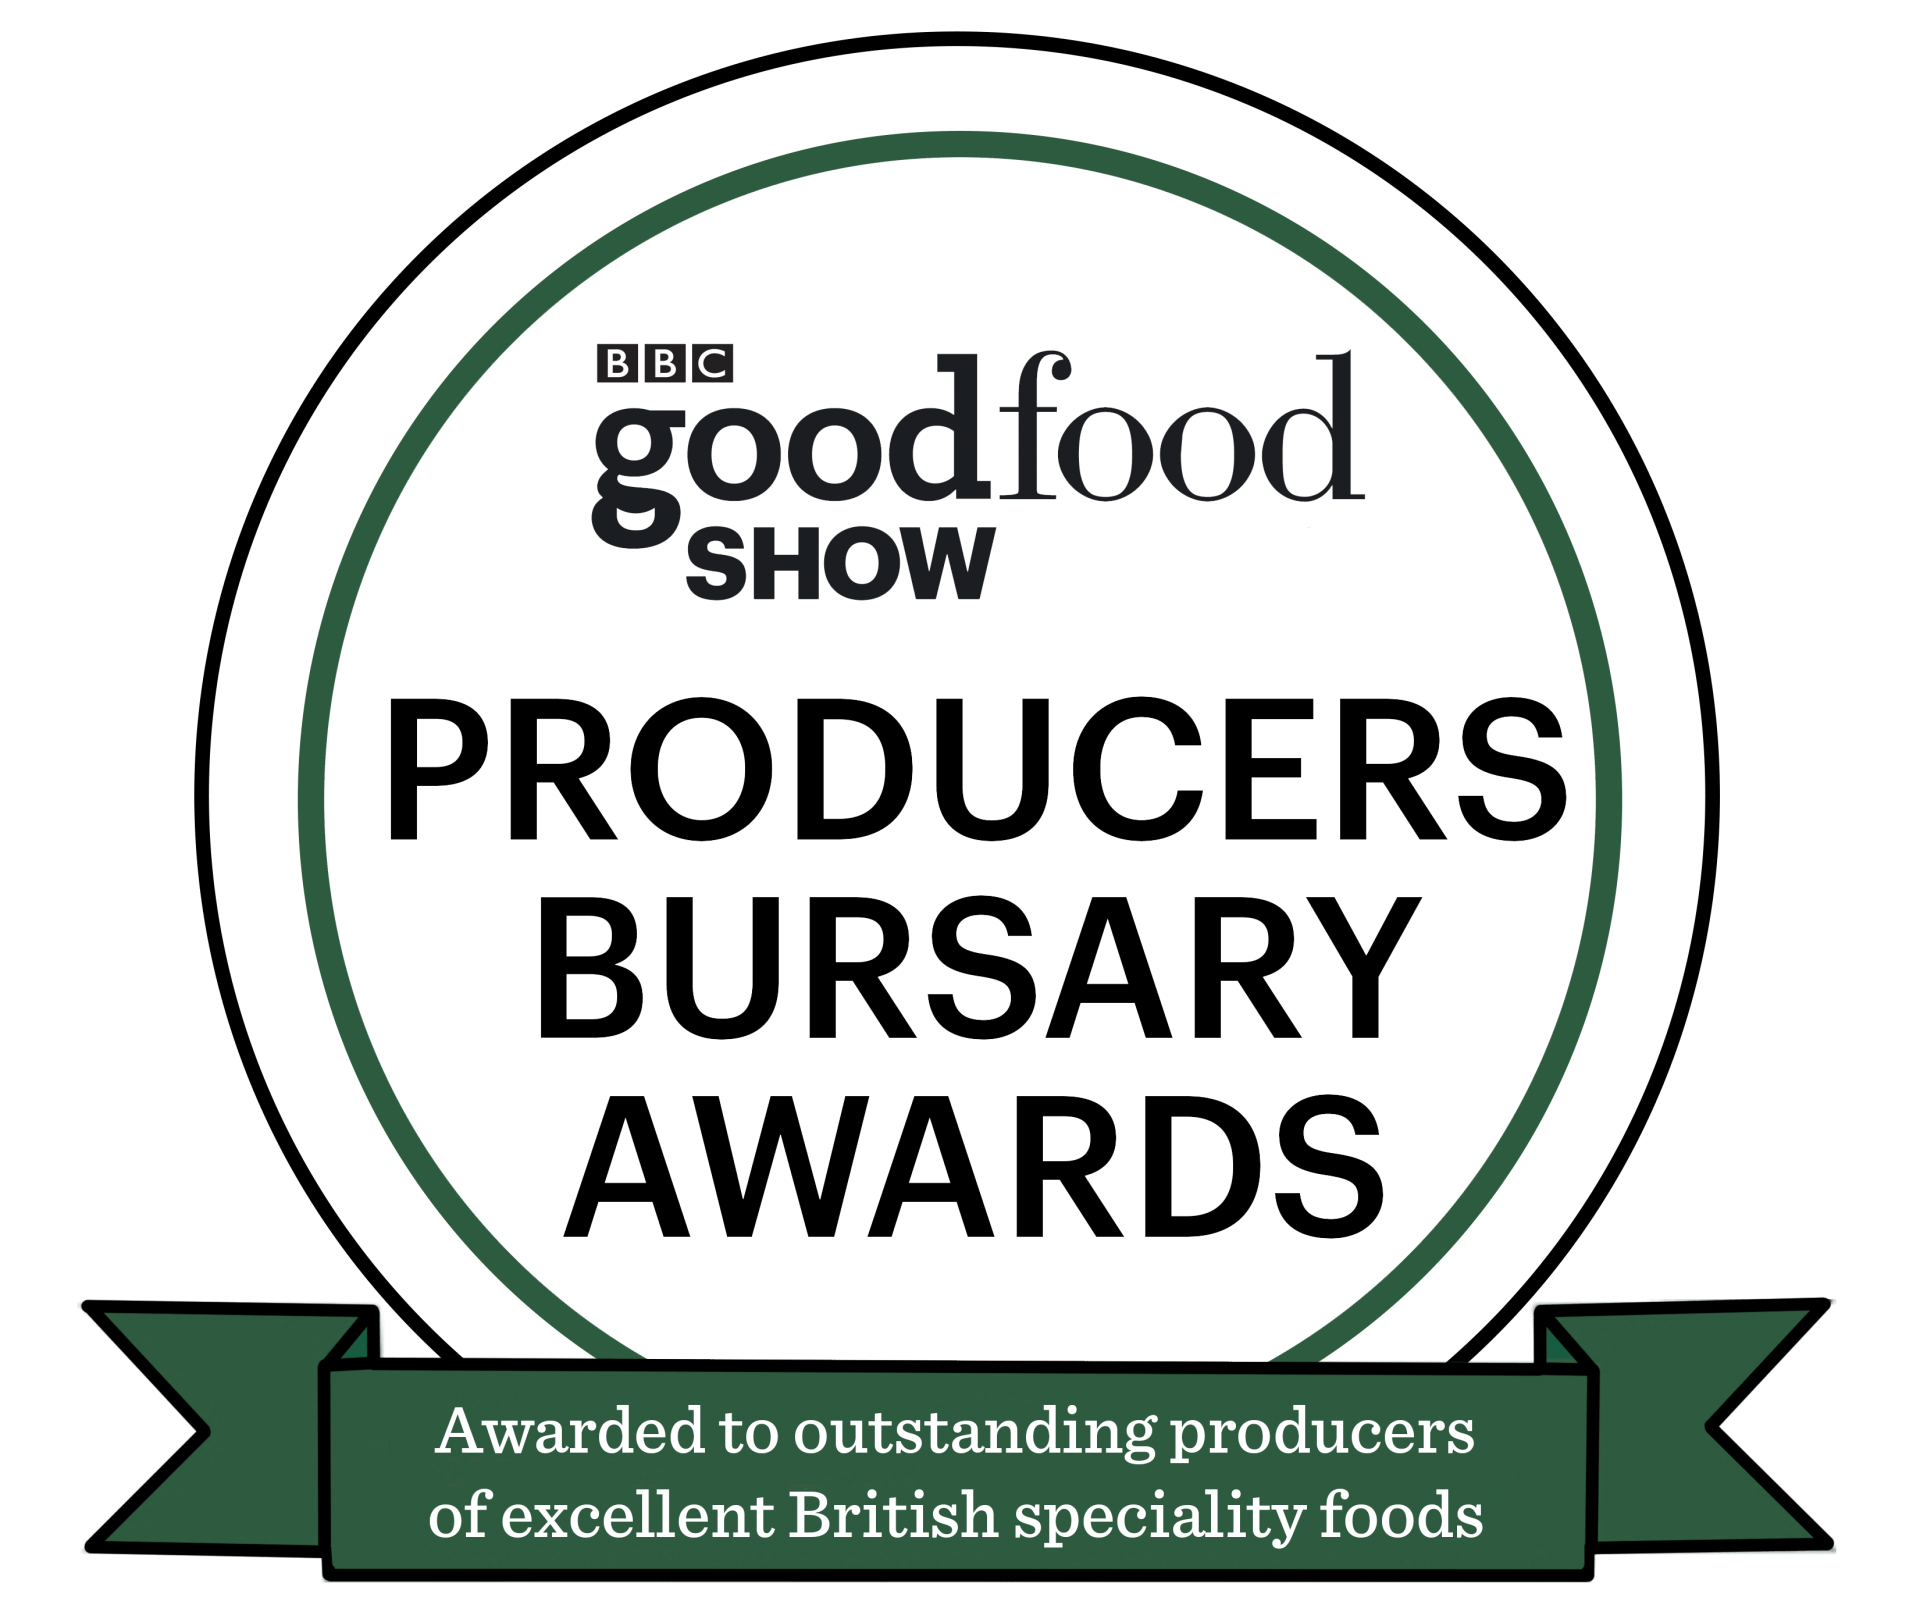 BBC Good Food Show Producers Bursary Awards